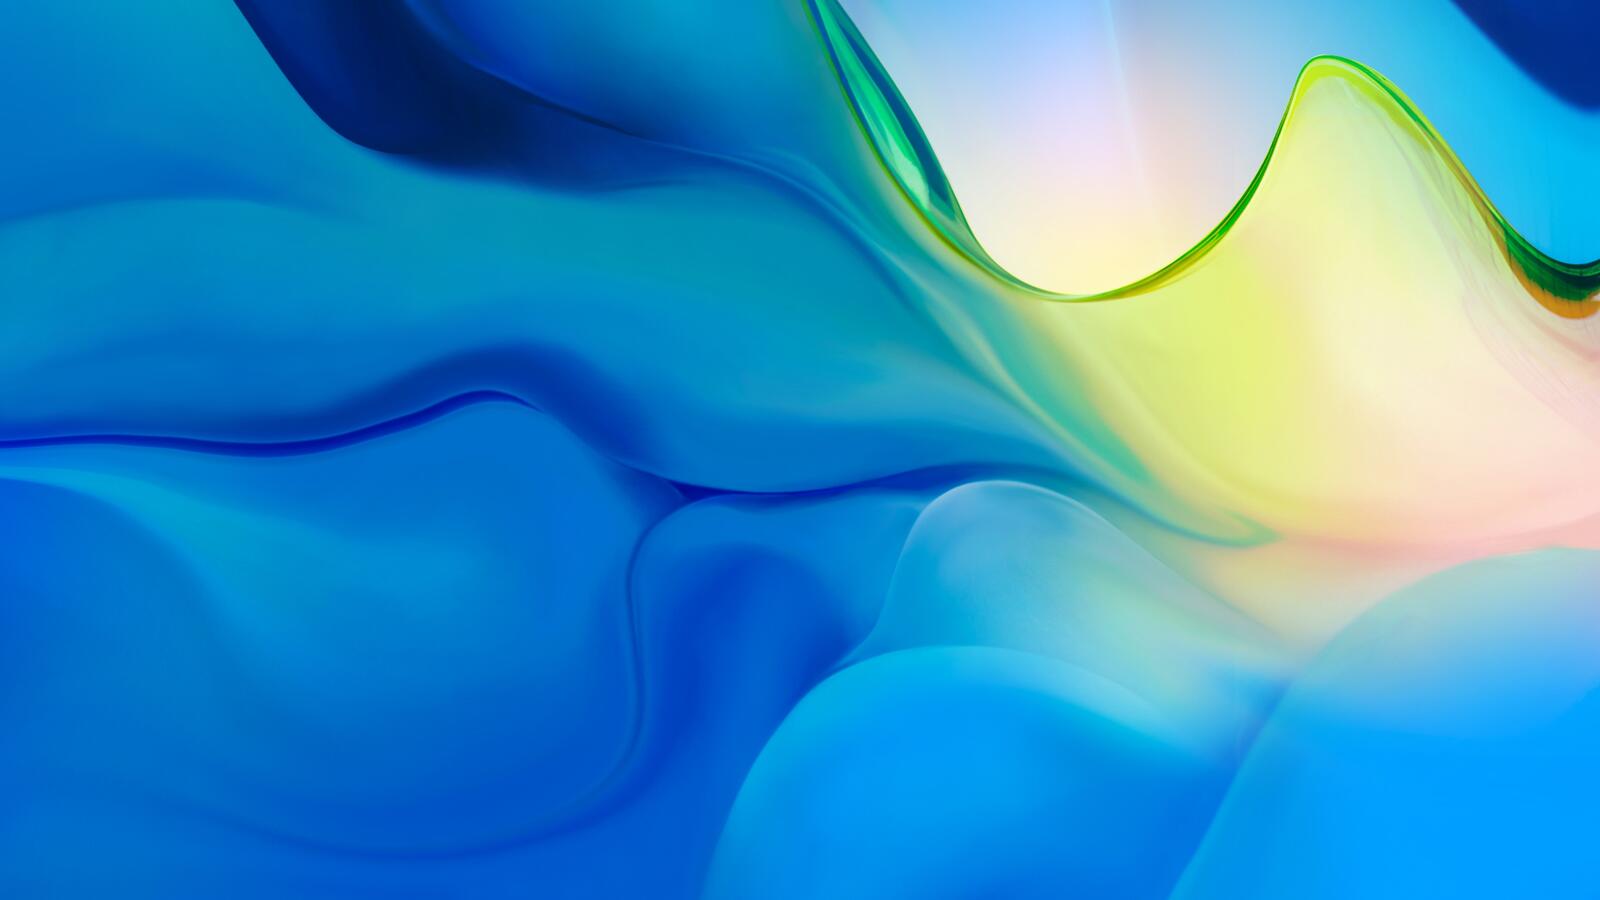 Wallpapers blue waves gradient wallpaper huawei p30 pro stock on the desktop